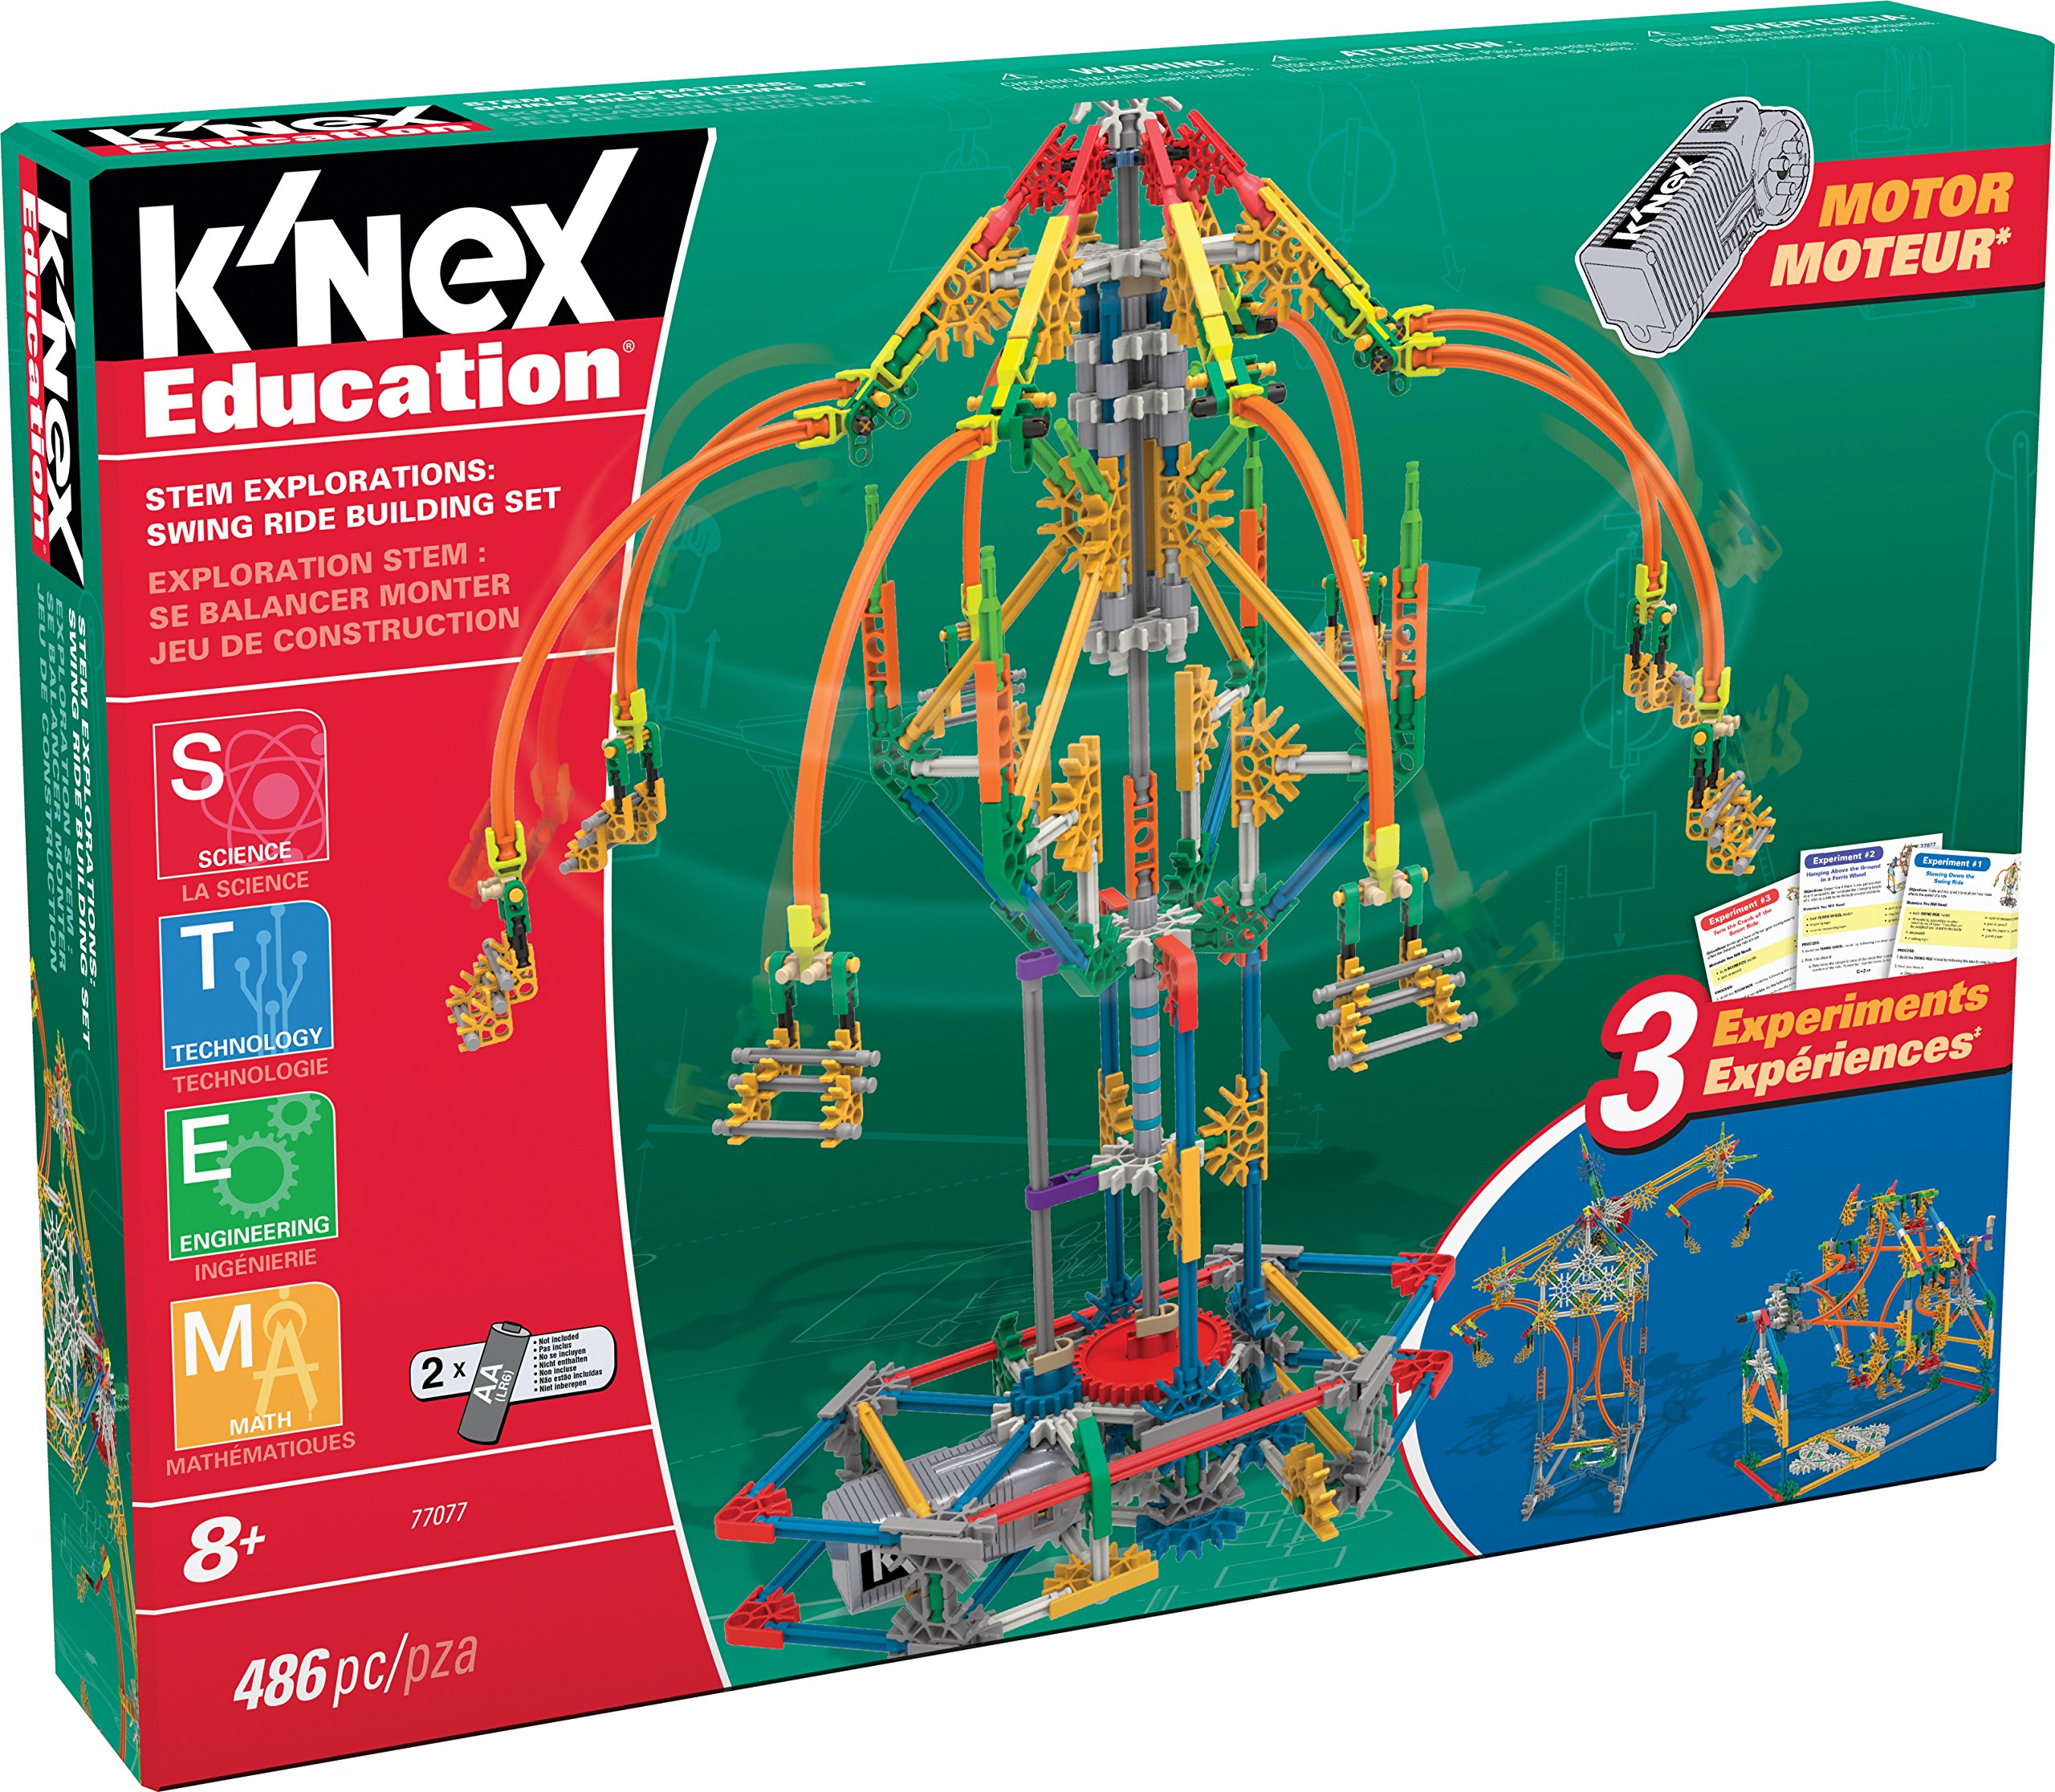 K'NEX Education - STEM Explorations: Swing Ride Building Set, 2 pieces